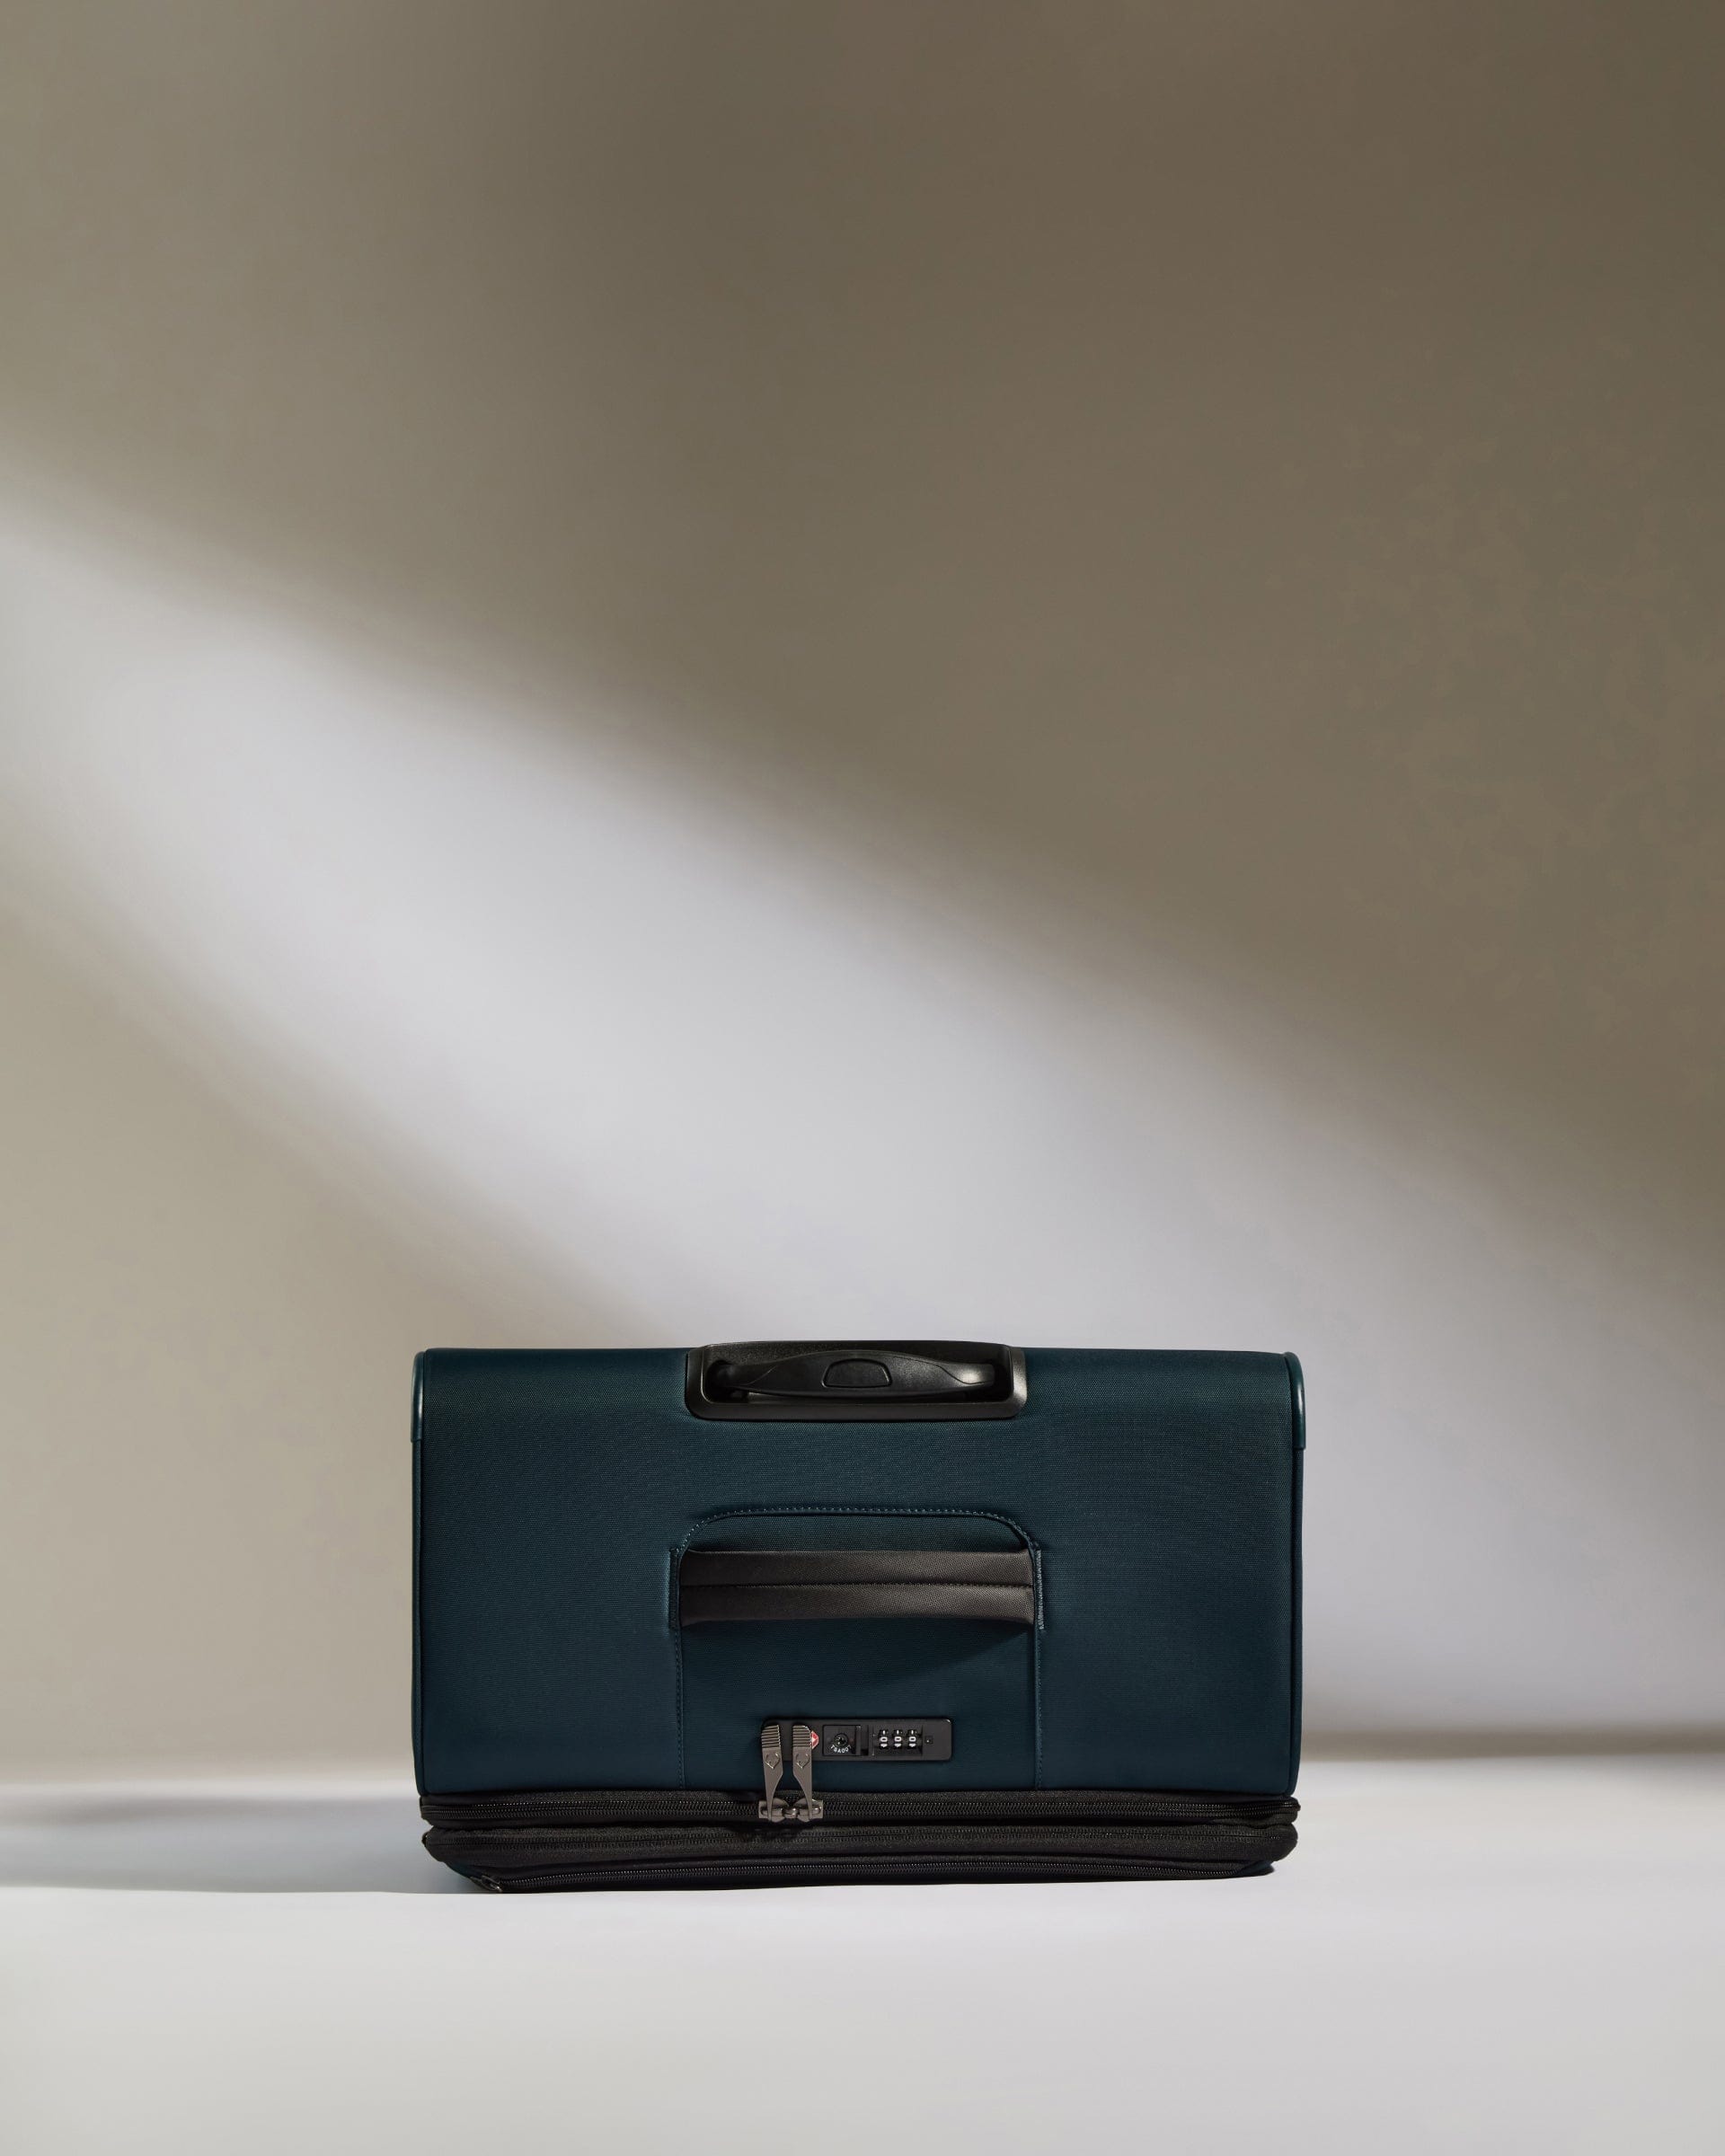 Antler Luggage -  Soft Stripe Large in Indigo - Soft Suitcase Soft Stripe Large in Indigo | Soft Suitcase